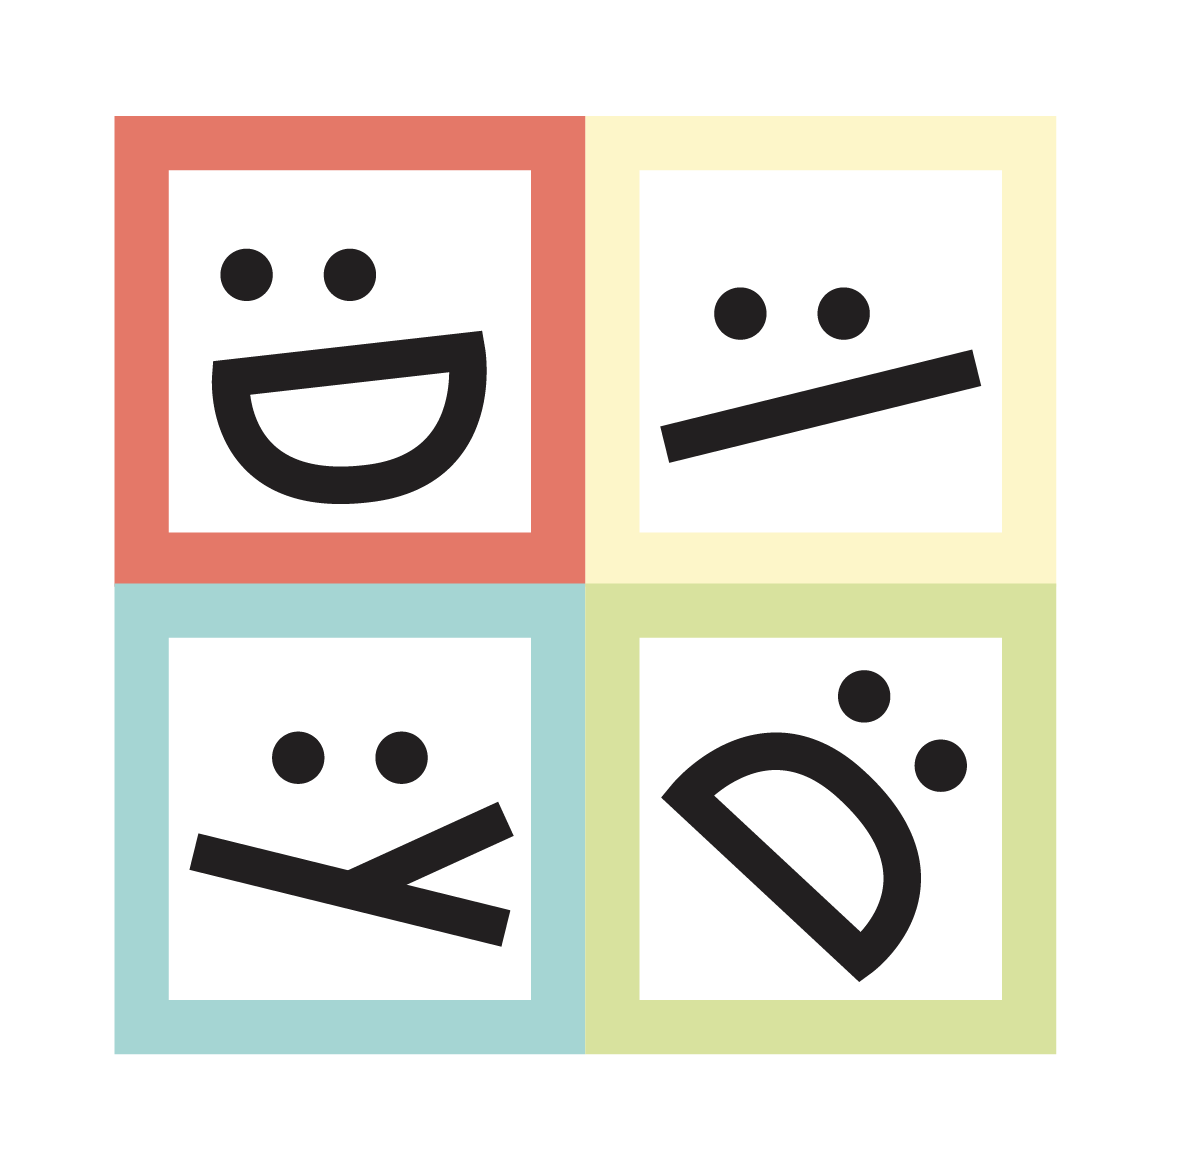 Student satisfaction survey logo faces